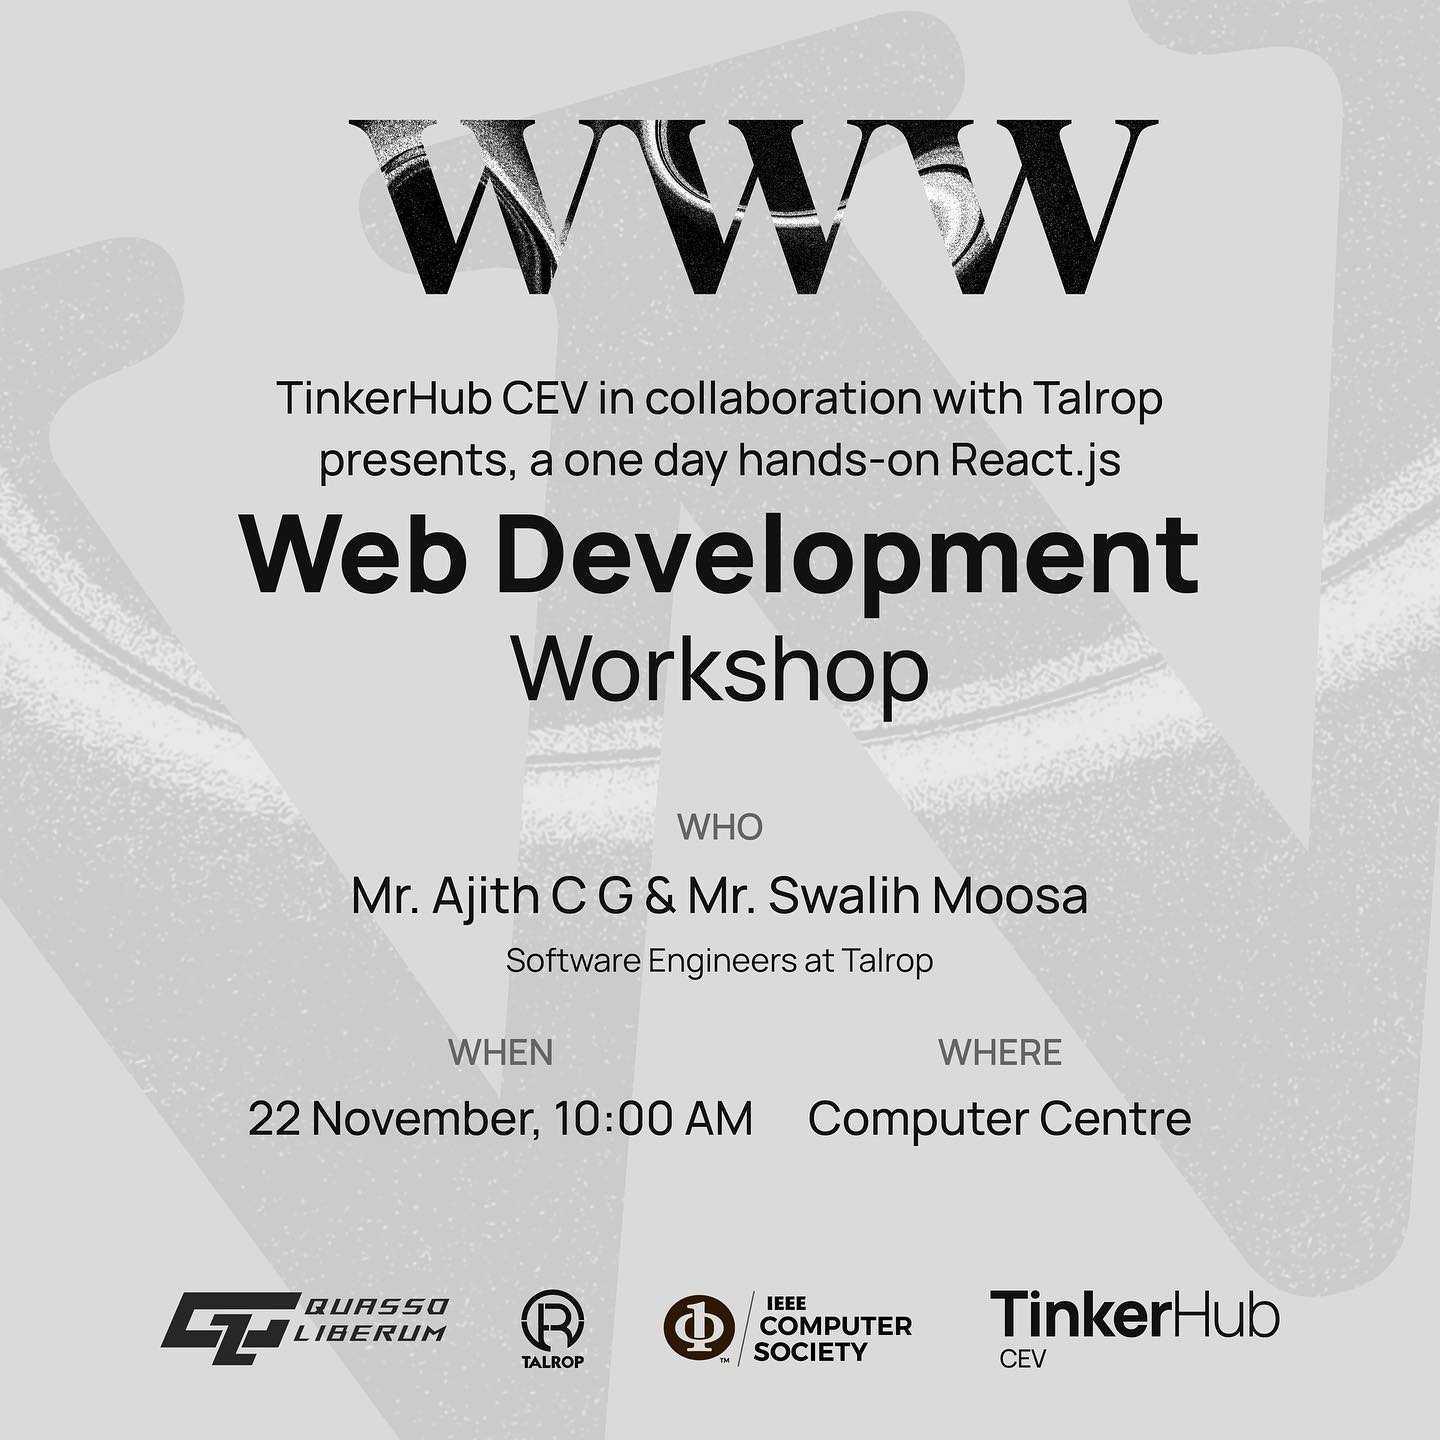 WWW - Workshop